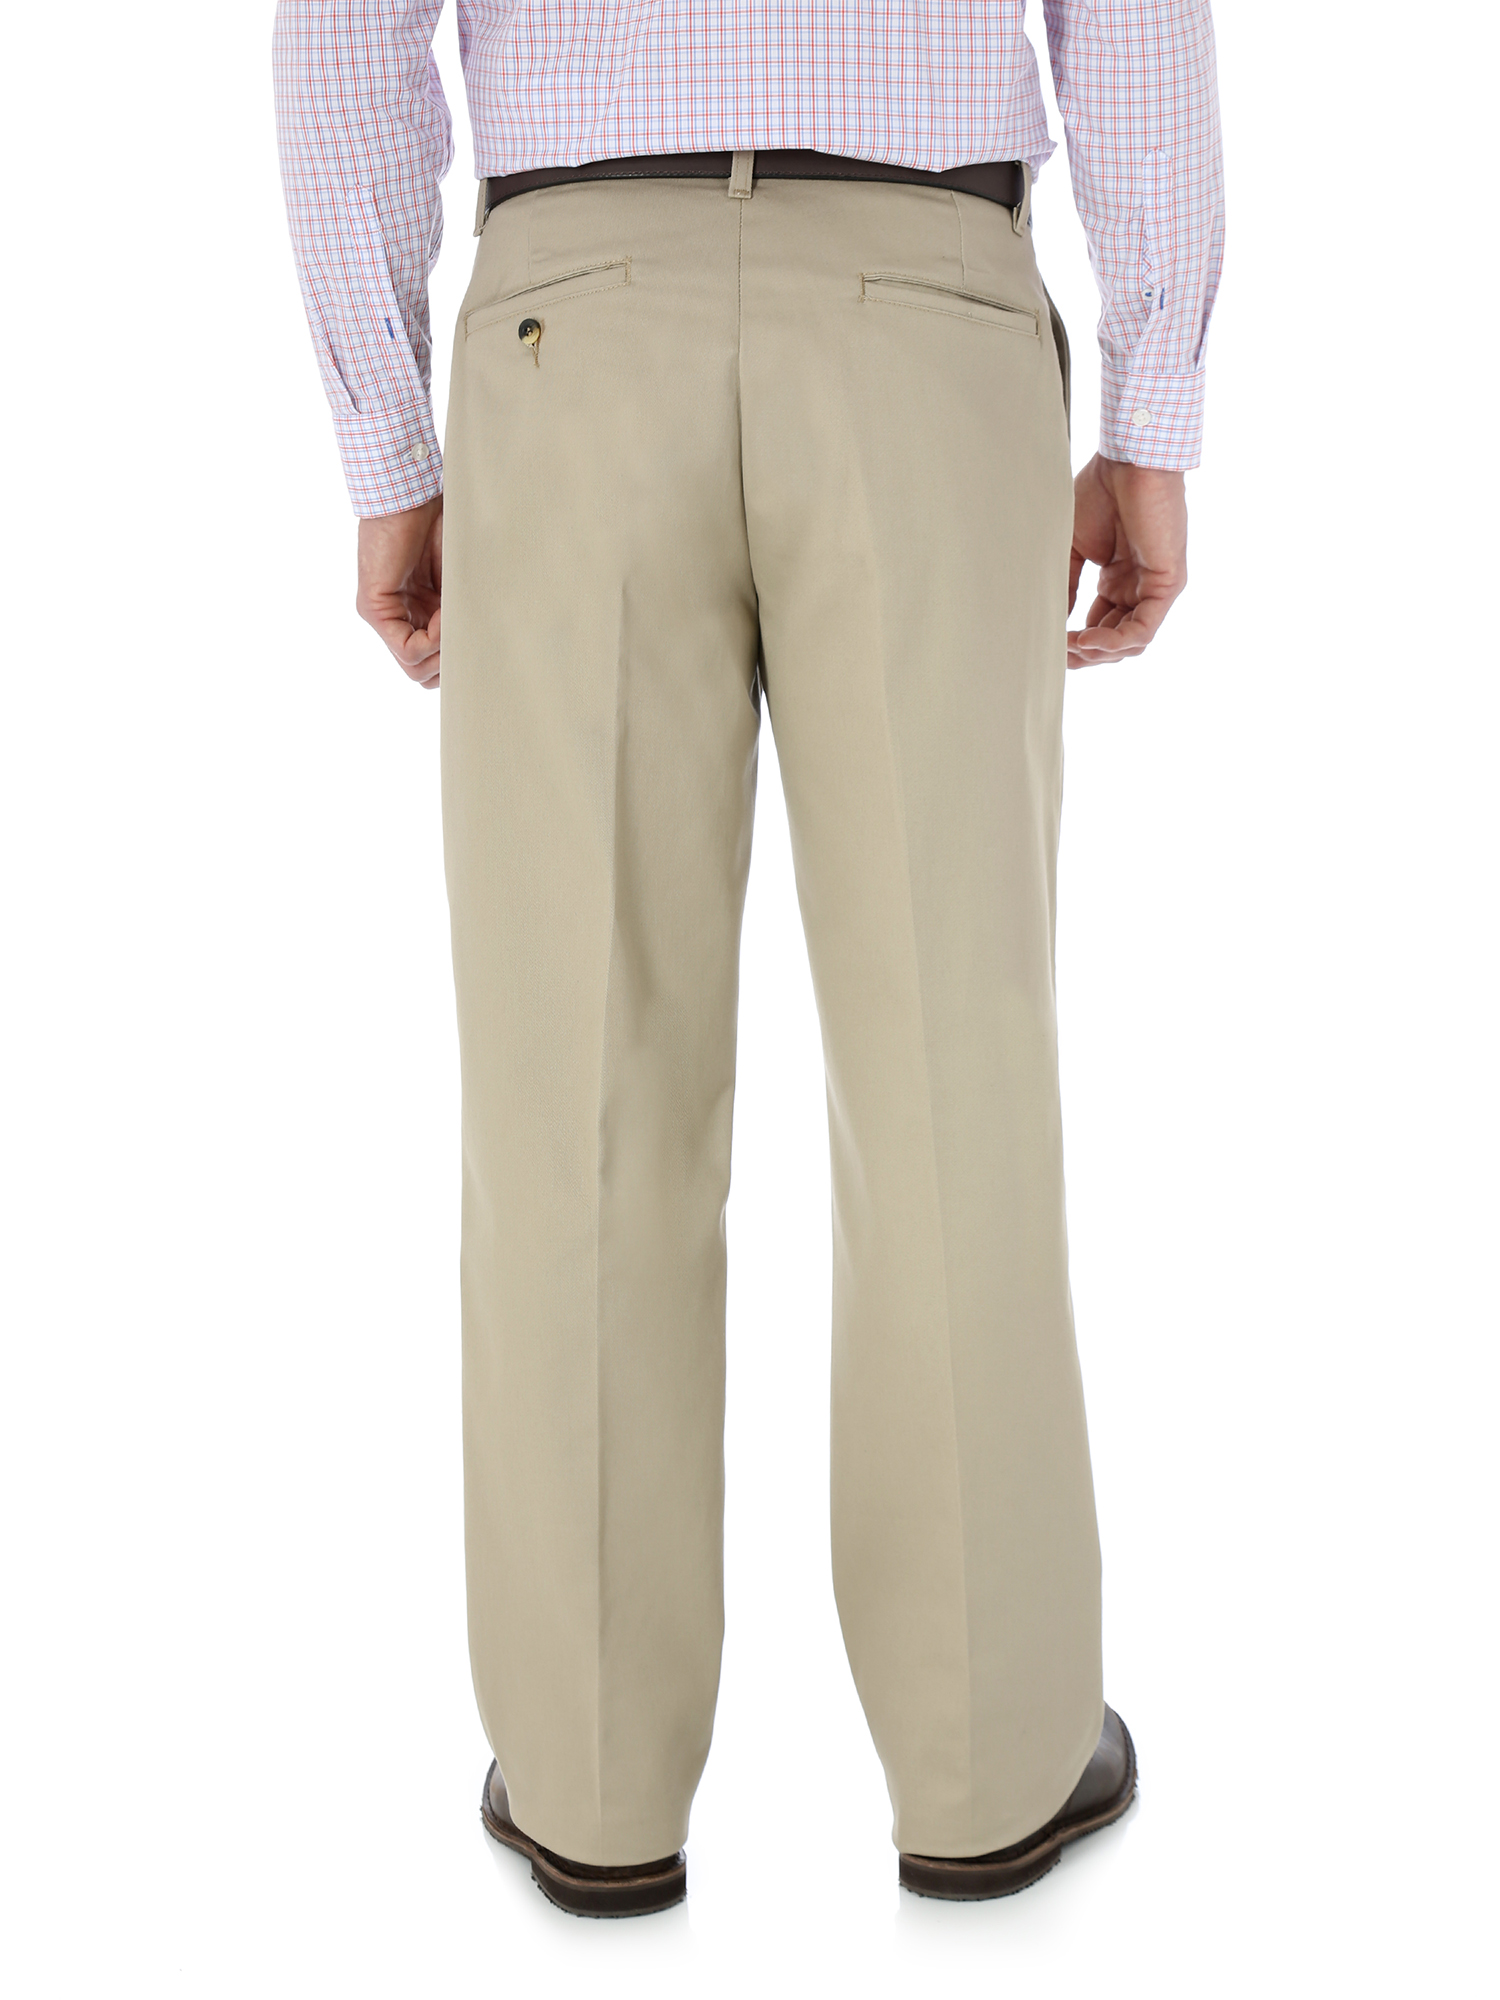 Big Men's Advanced Comfort Flat Front Pants - image 3 of 3